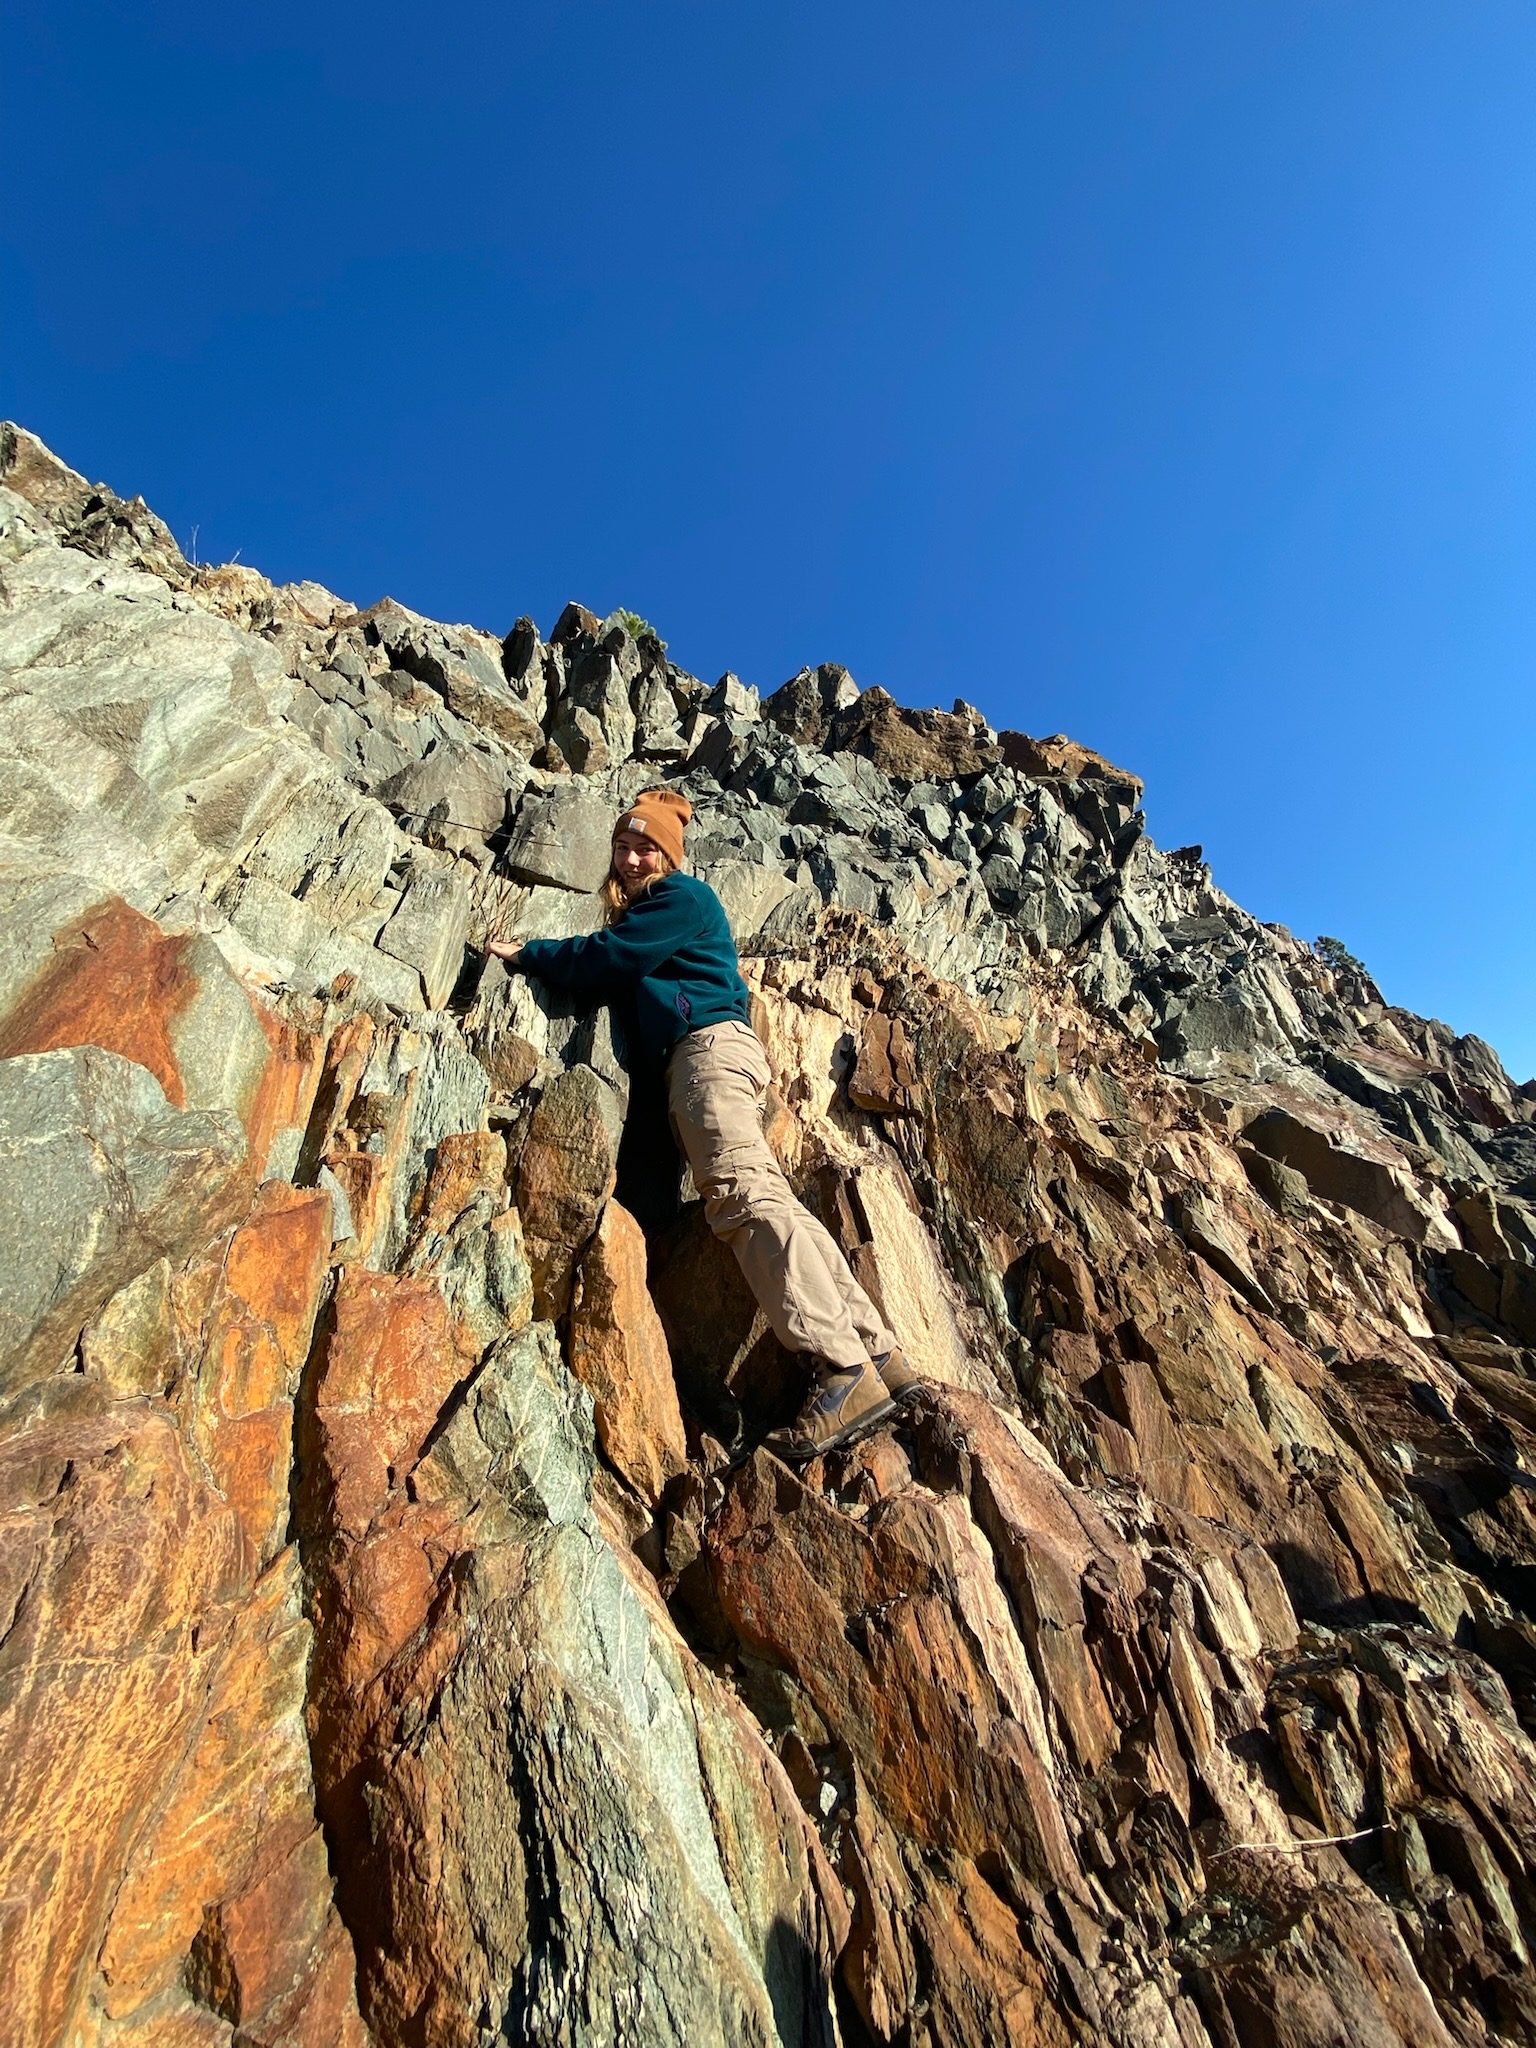 Rock climbing!